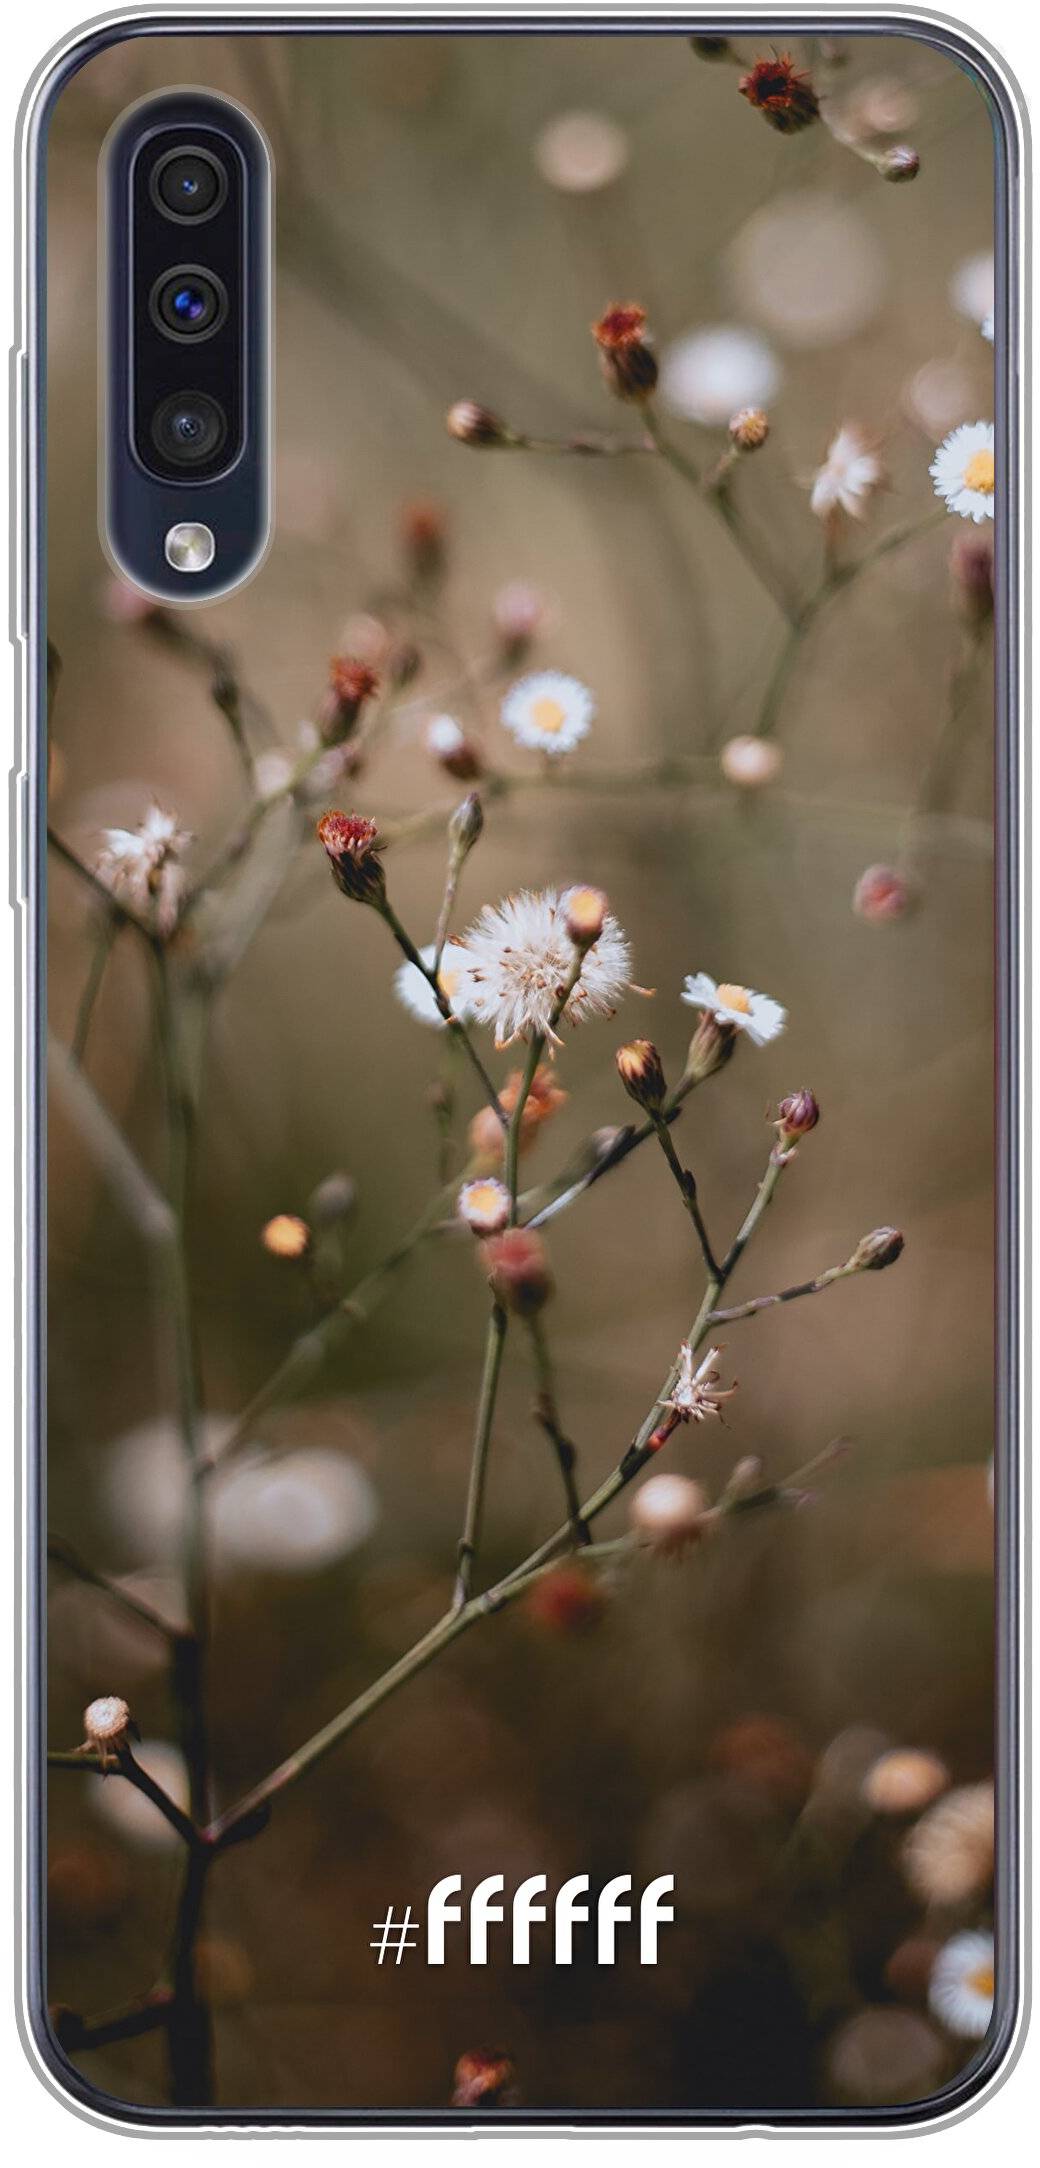 Flower Buds Galaxy A50s